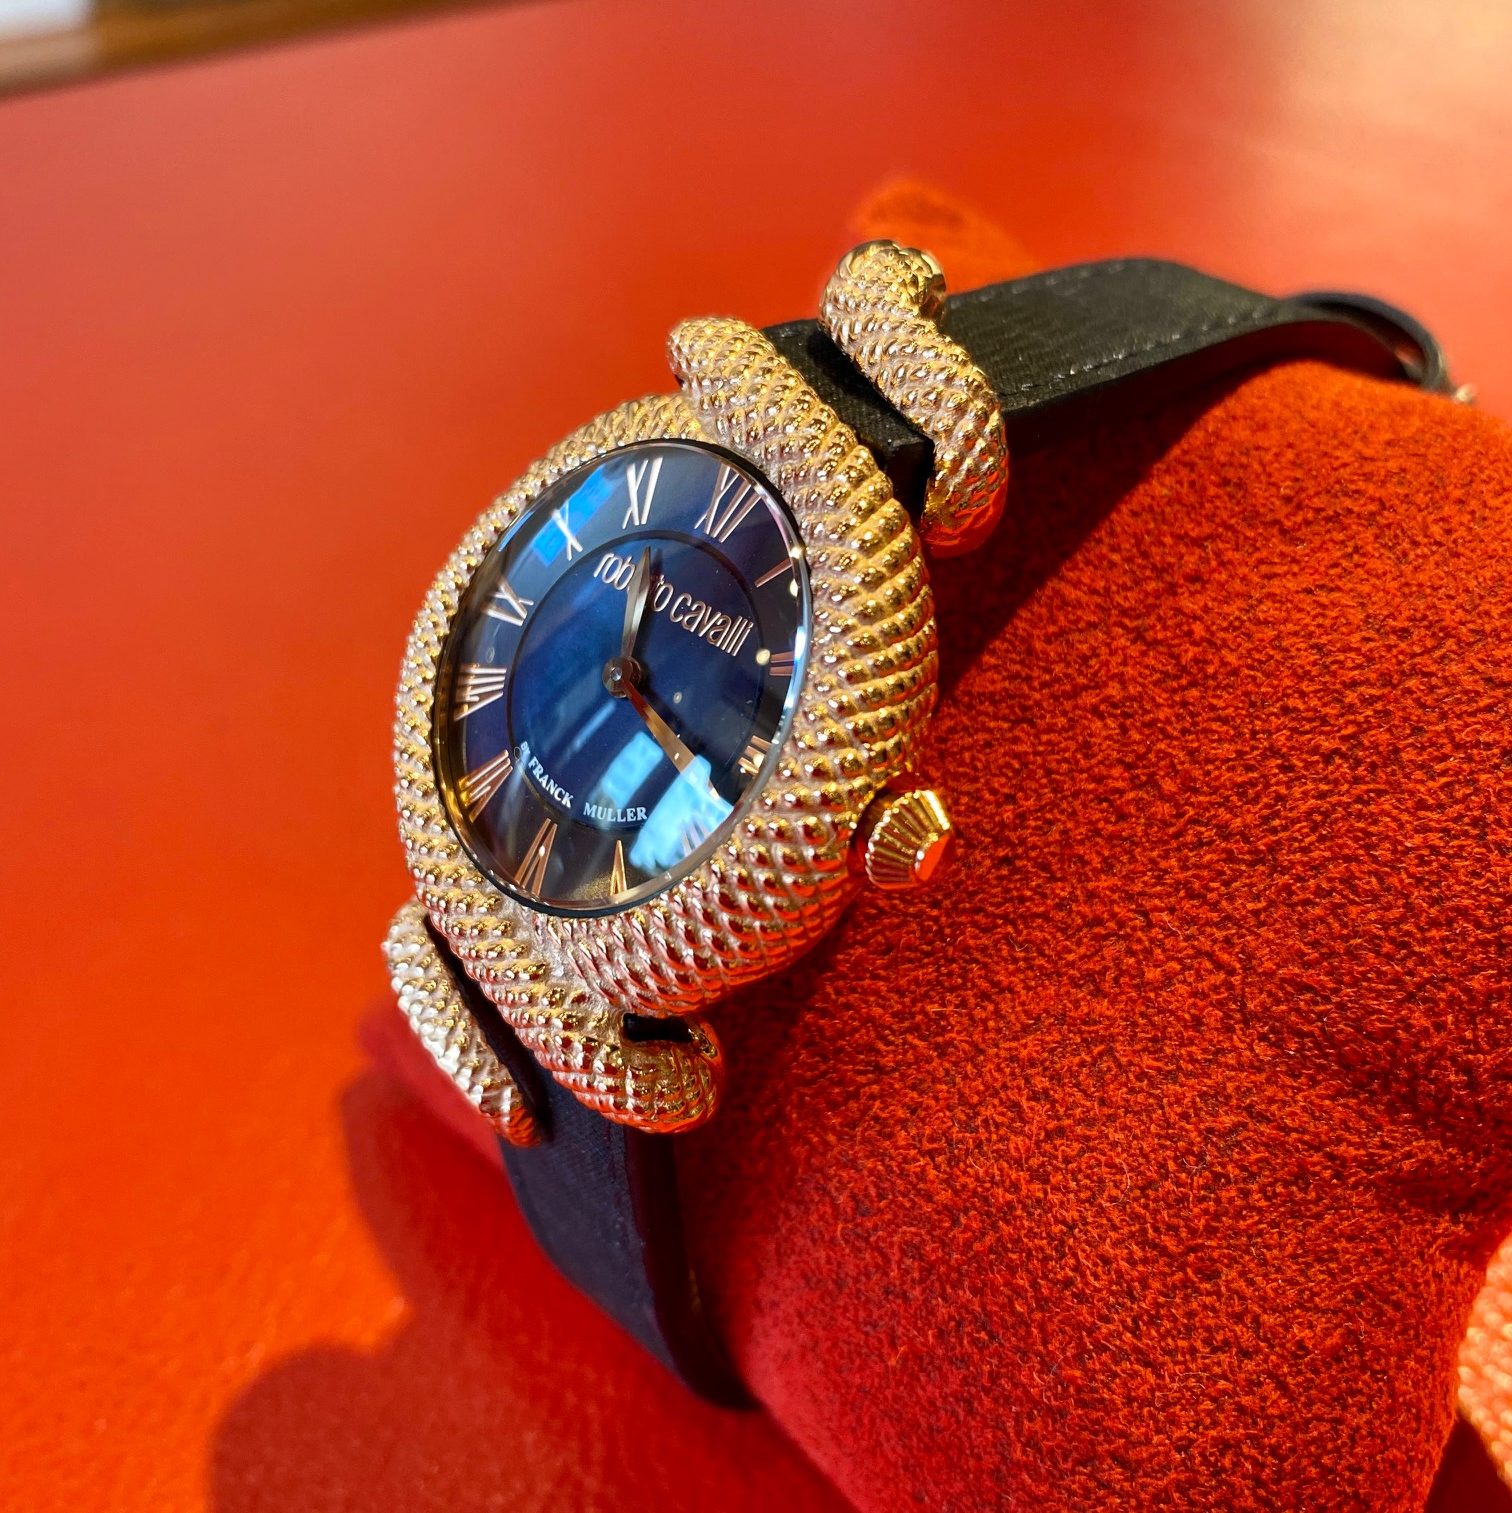 A美品…綺麗な状態の商品美品 ロベルトカヴァリ by フランクミュラー 腕時計 レディース ゴールド